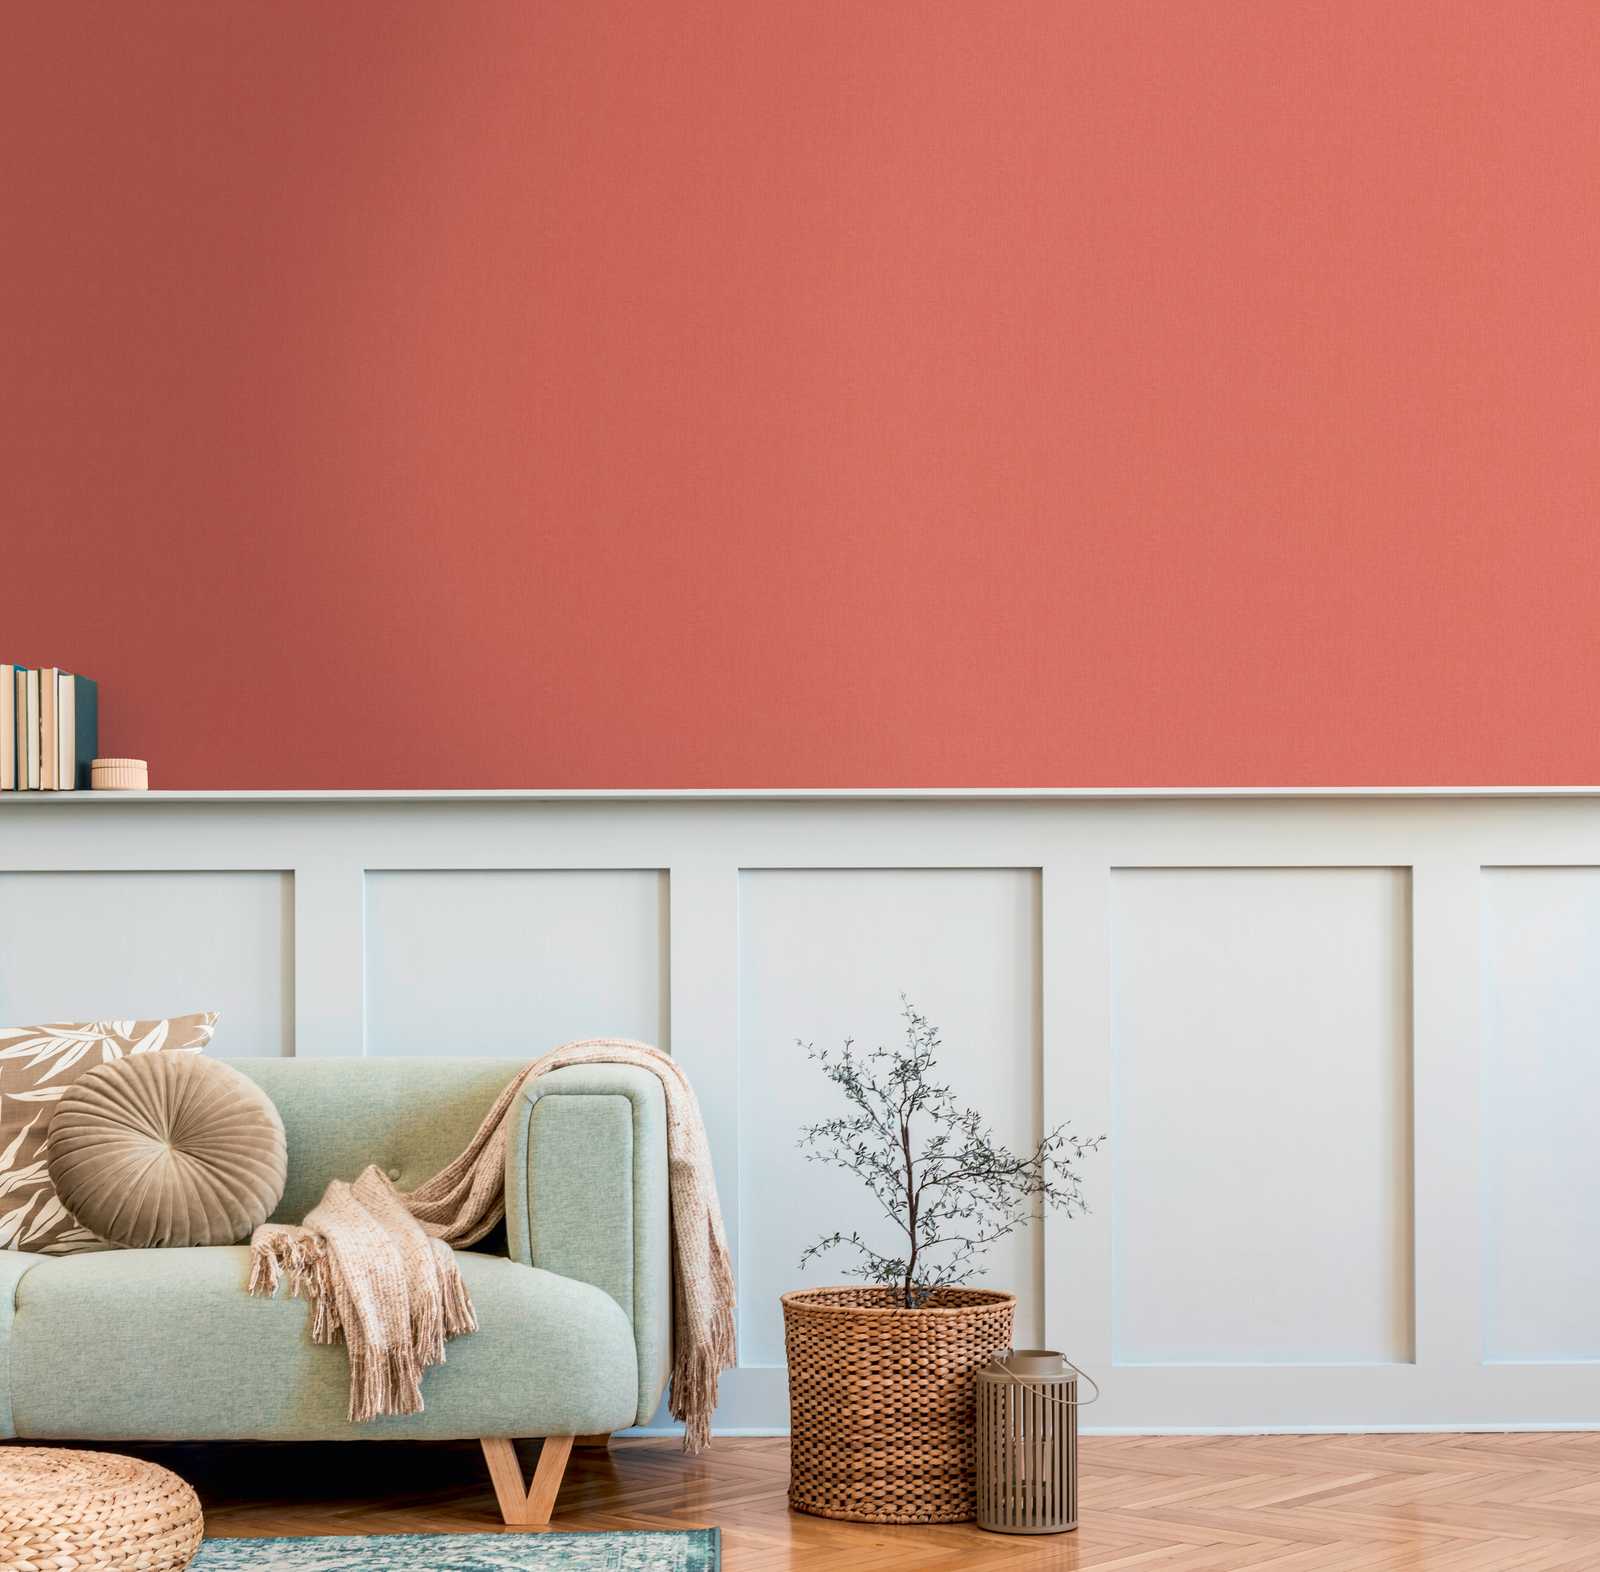             Tapete Orange mit Leinenstruktrur & Terrakotta Farbe
        